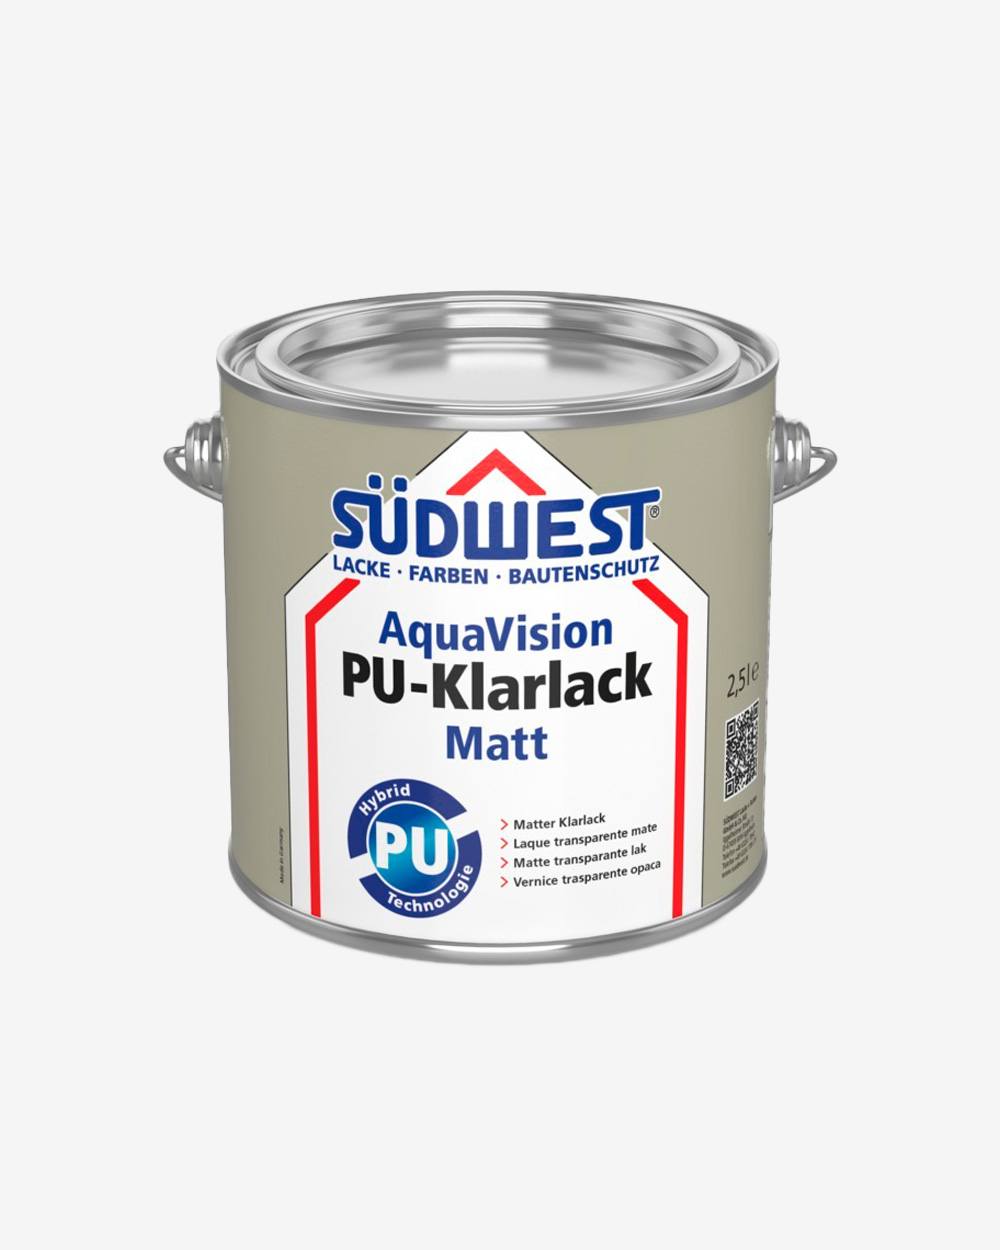 Südwest AquaVision PU-Klarlack Matt - 2.5 L